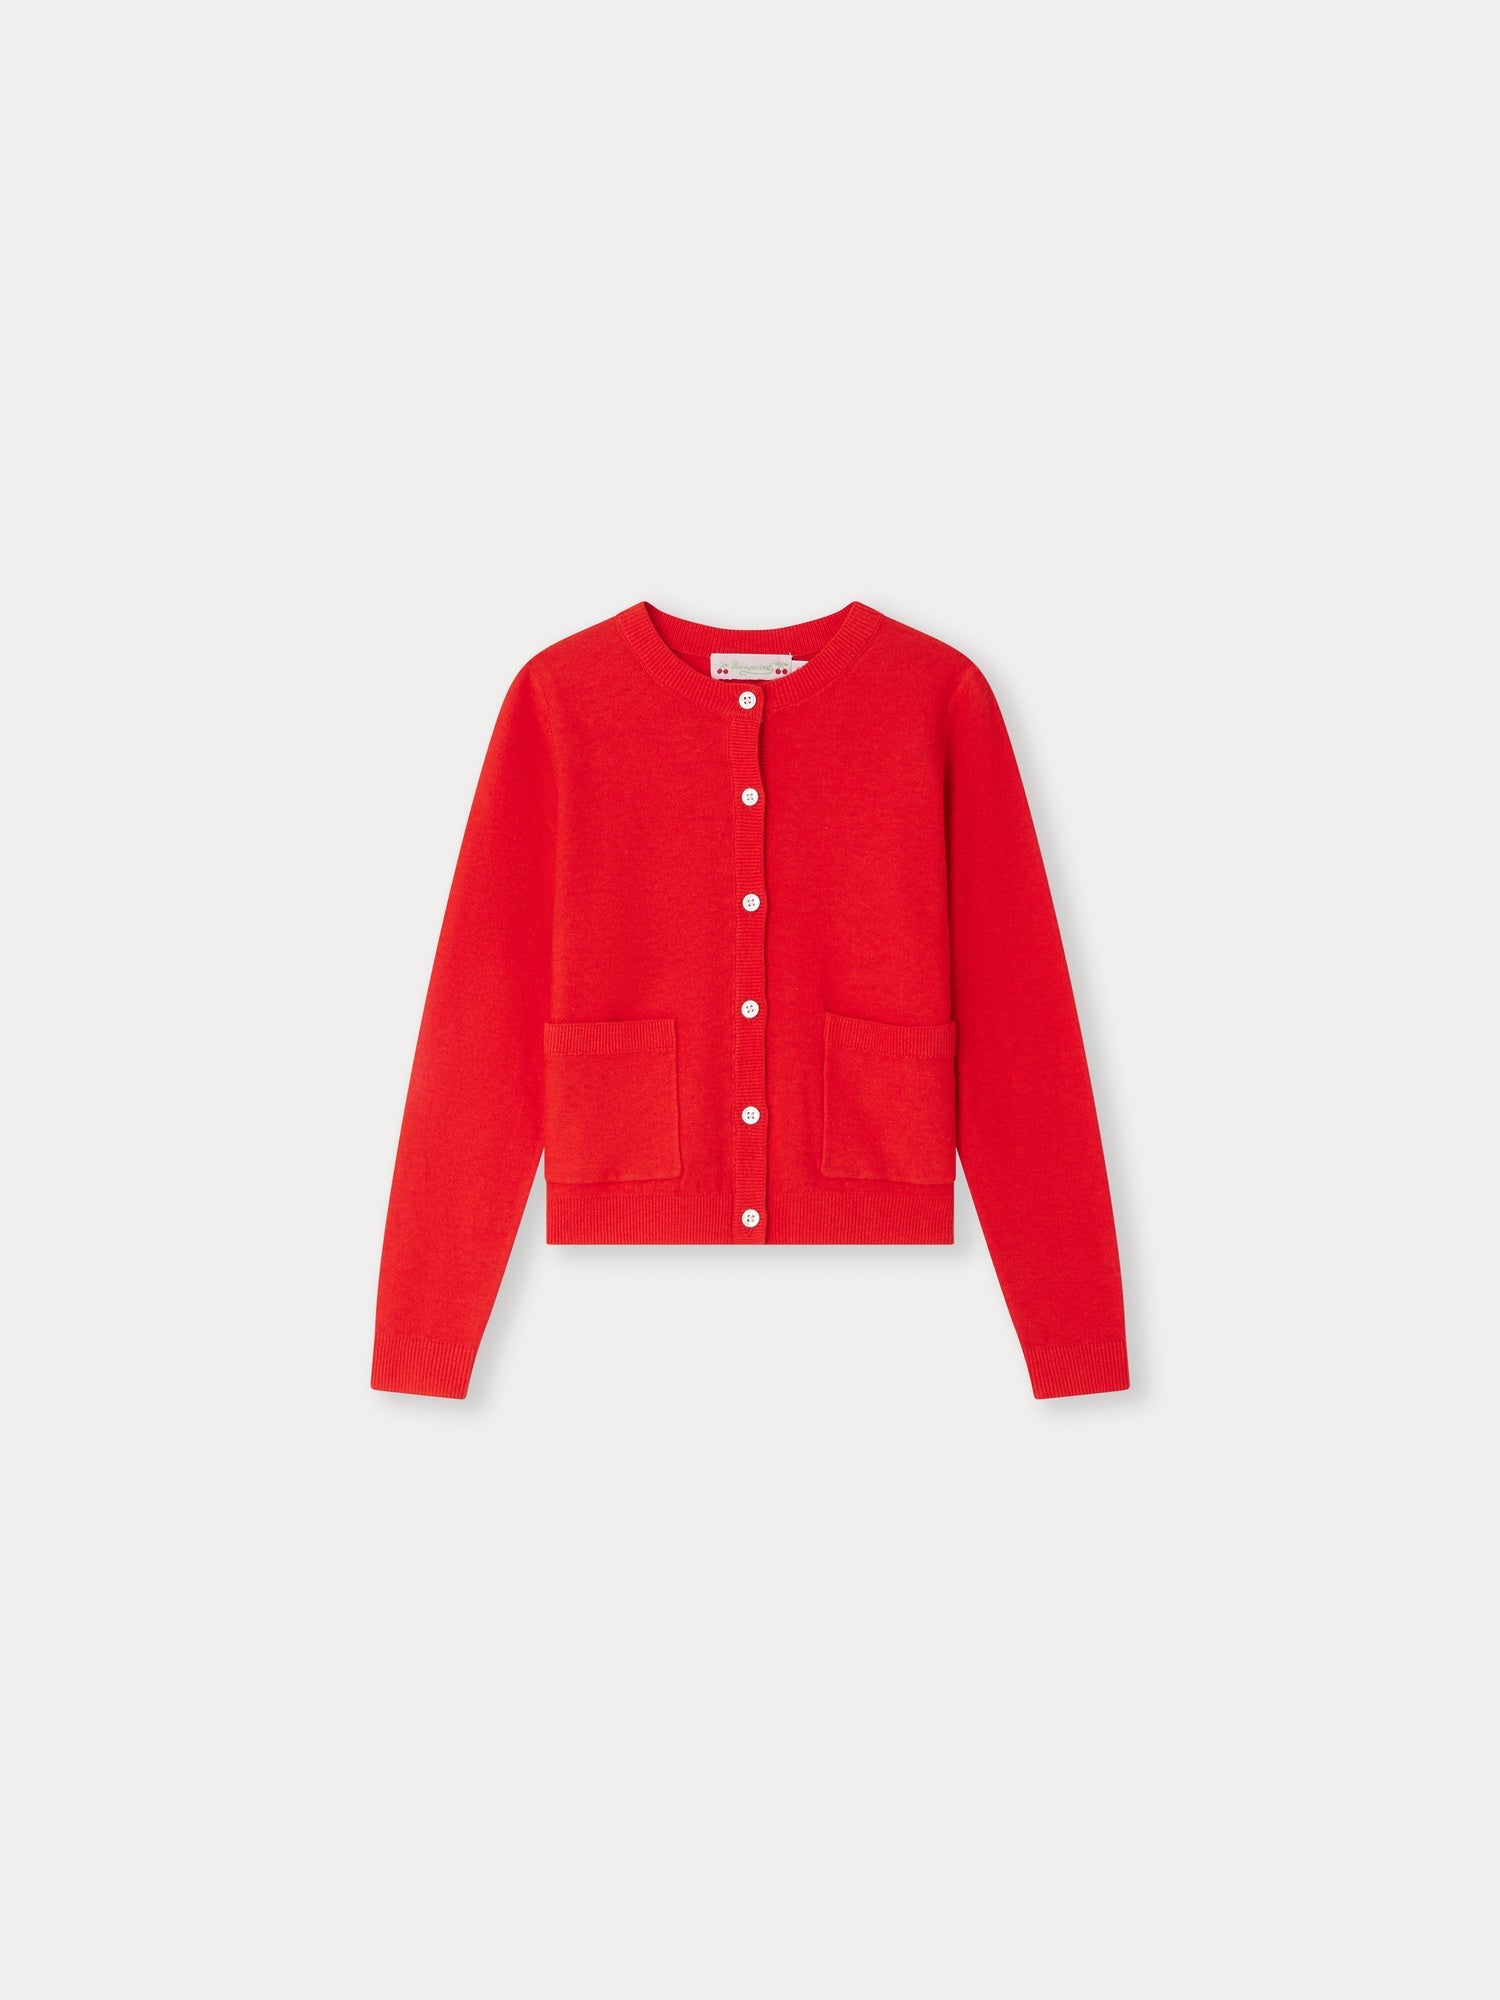 Girls Red Cotton Cardigan